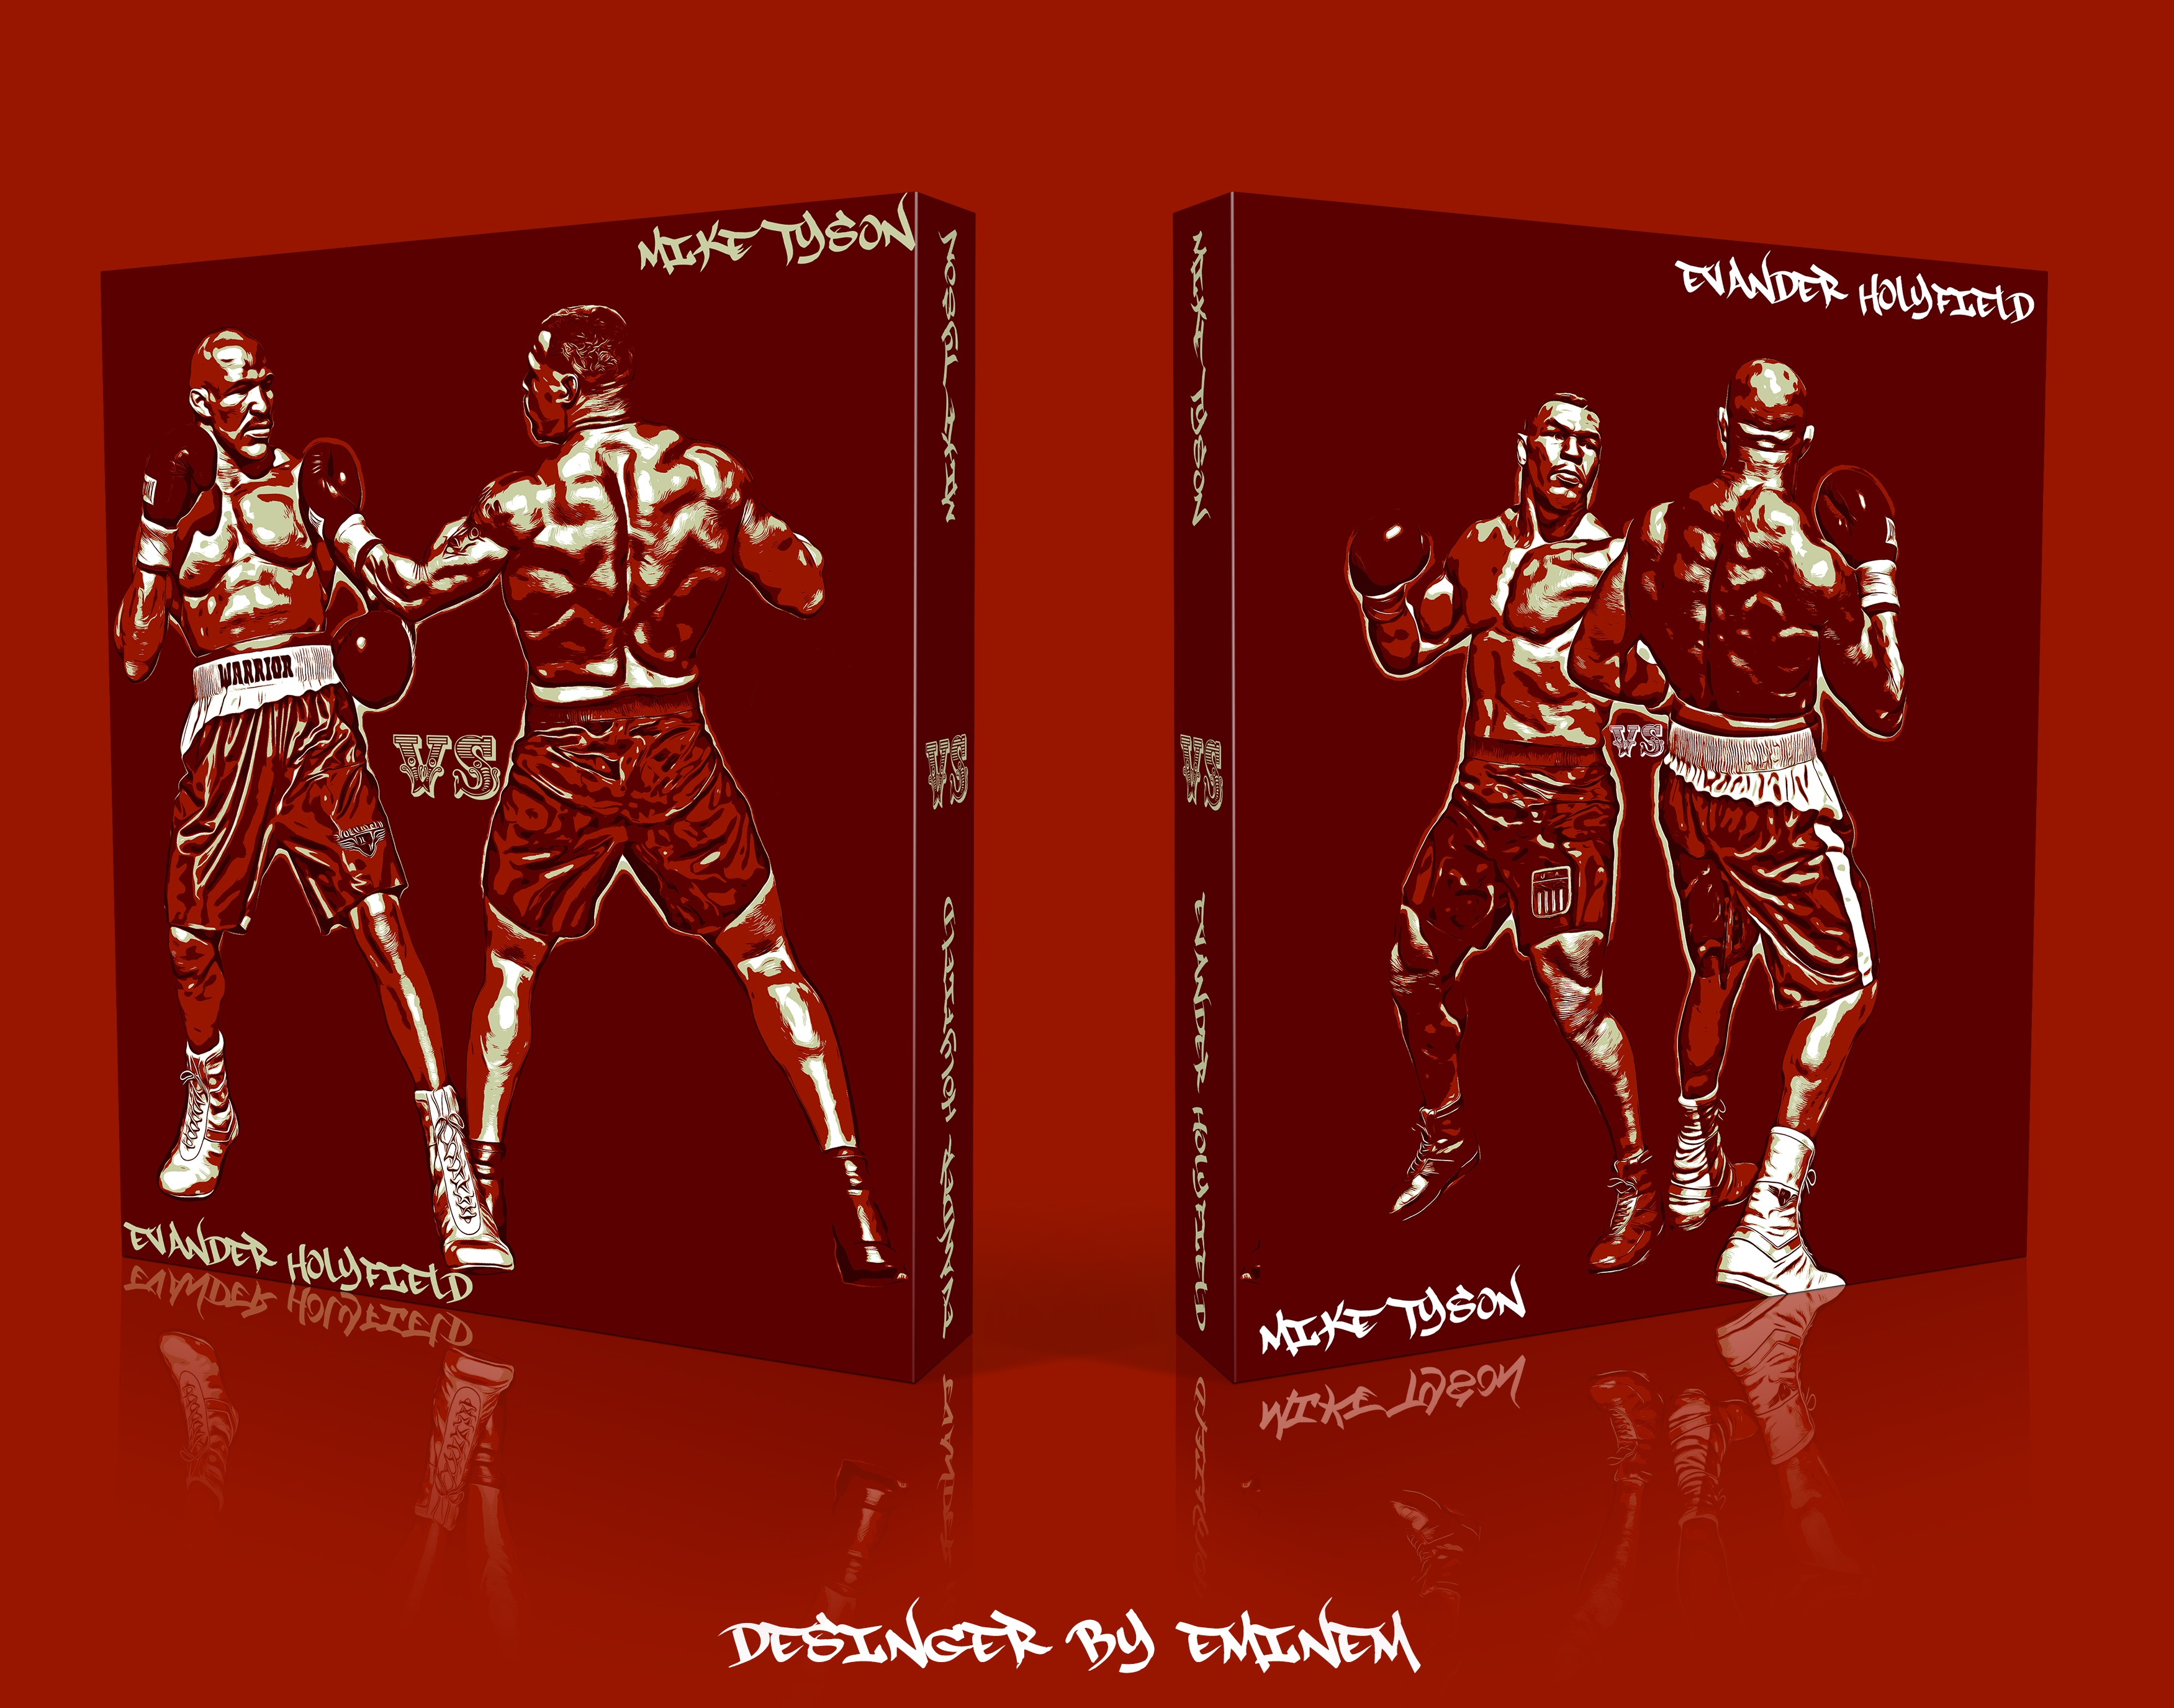 Mike Tyson vs Evander Holyfield box cover